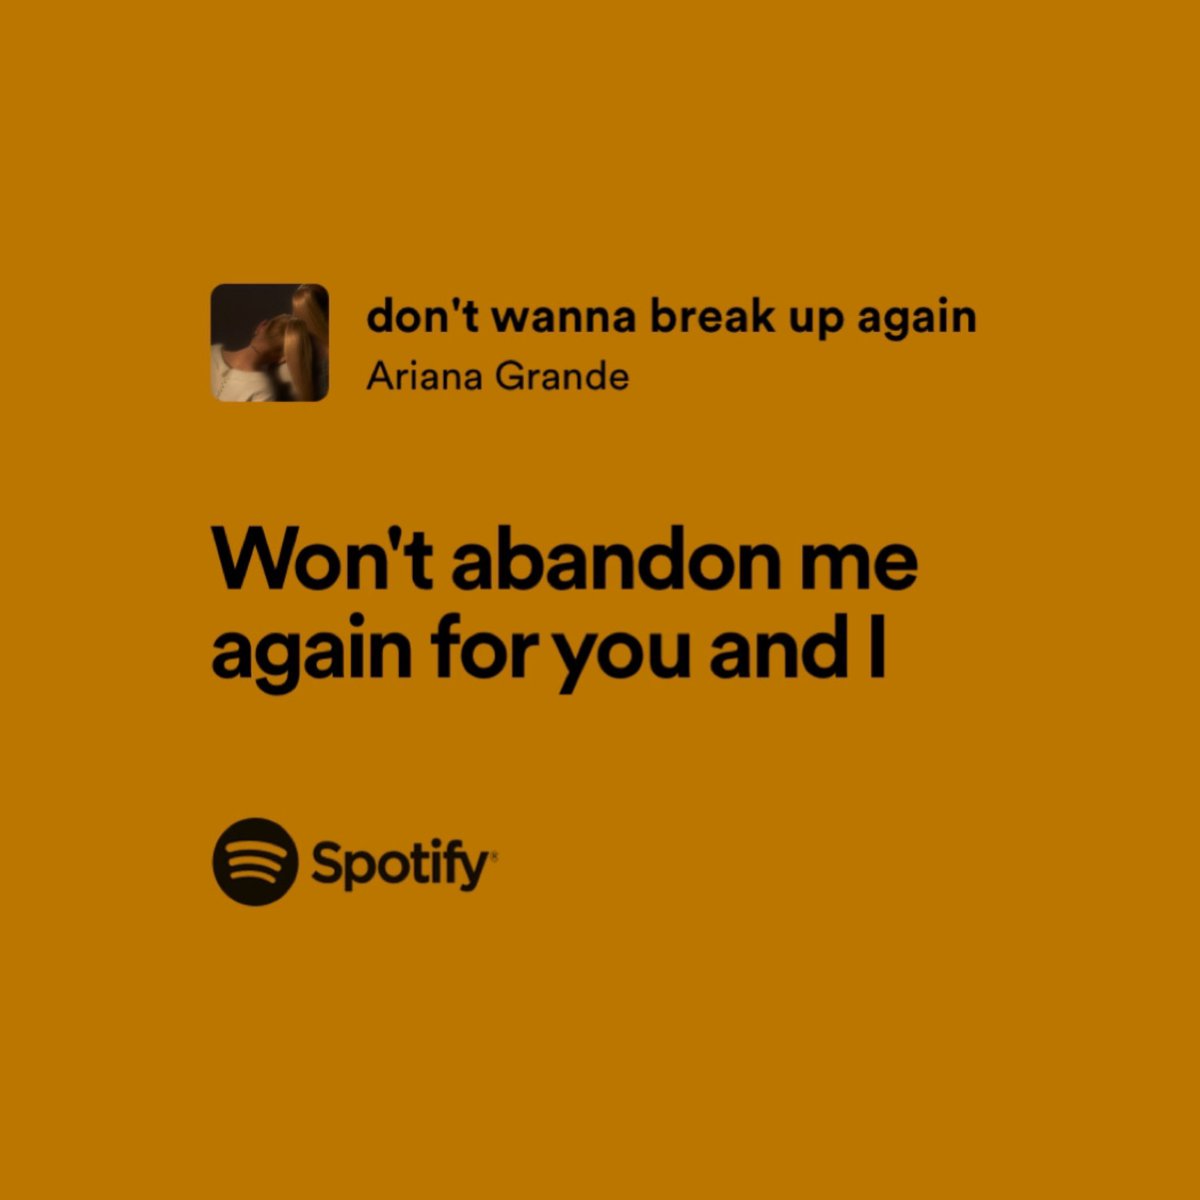 ariana grande / don’t wanna break up again